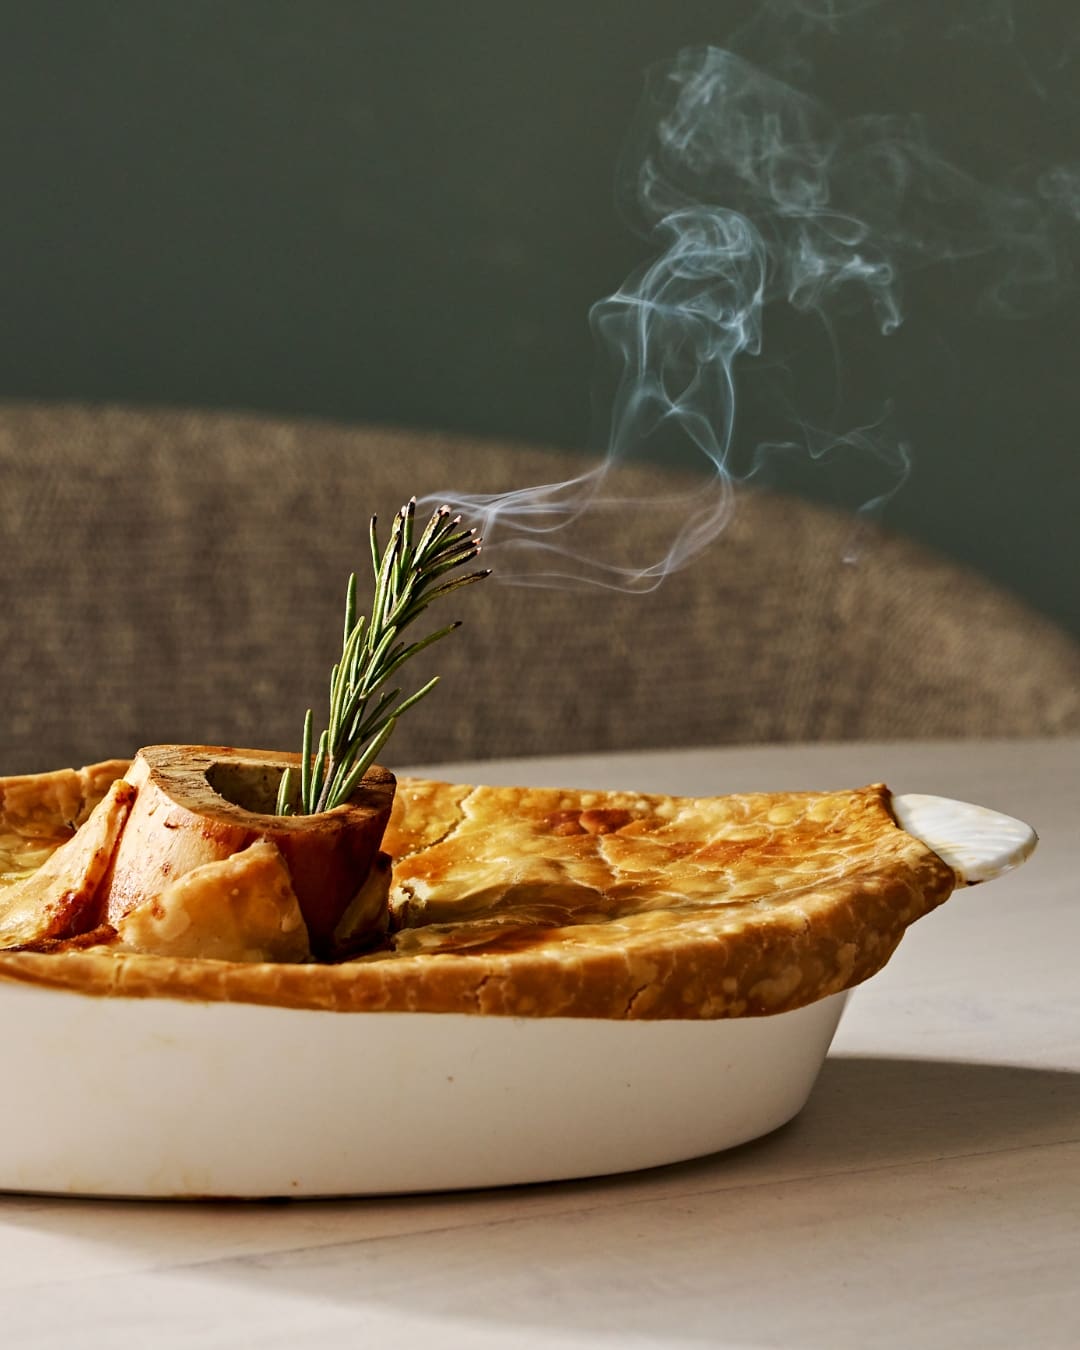 Hokkaido style beef pie topped with bone marrow and a smoking rosemary sprig